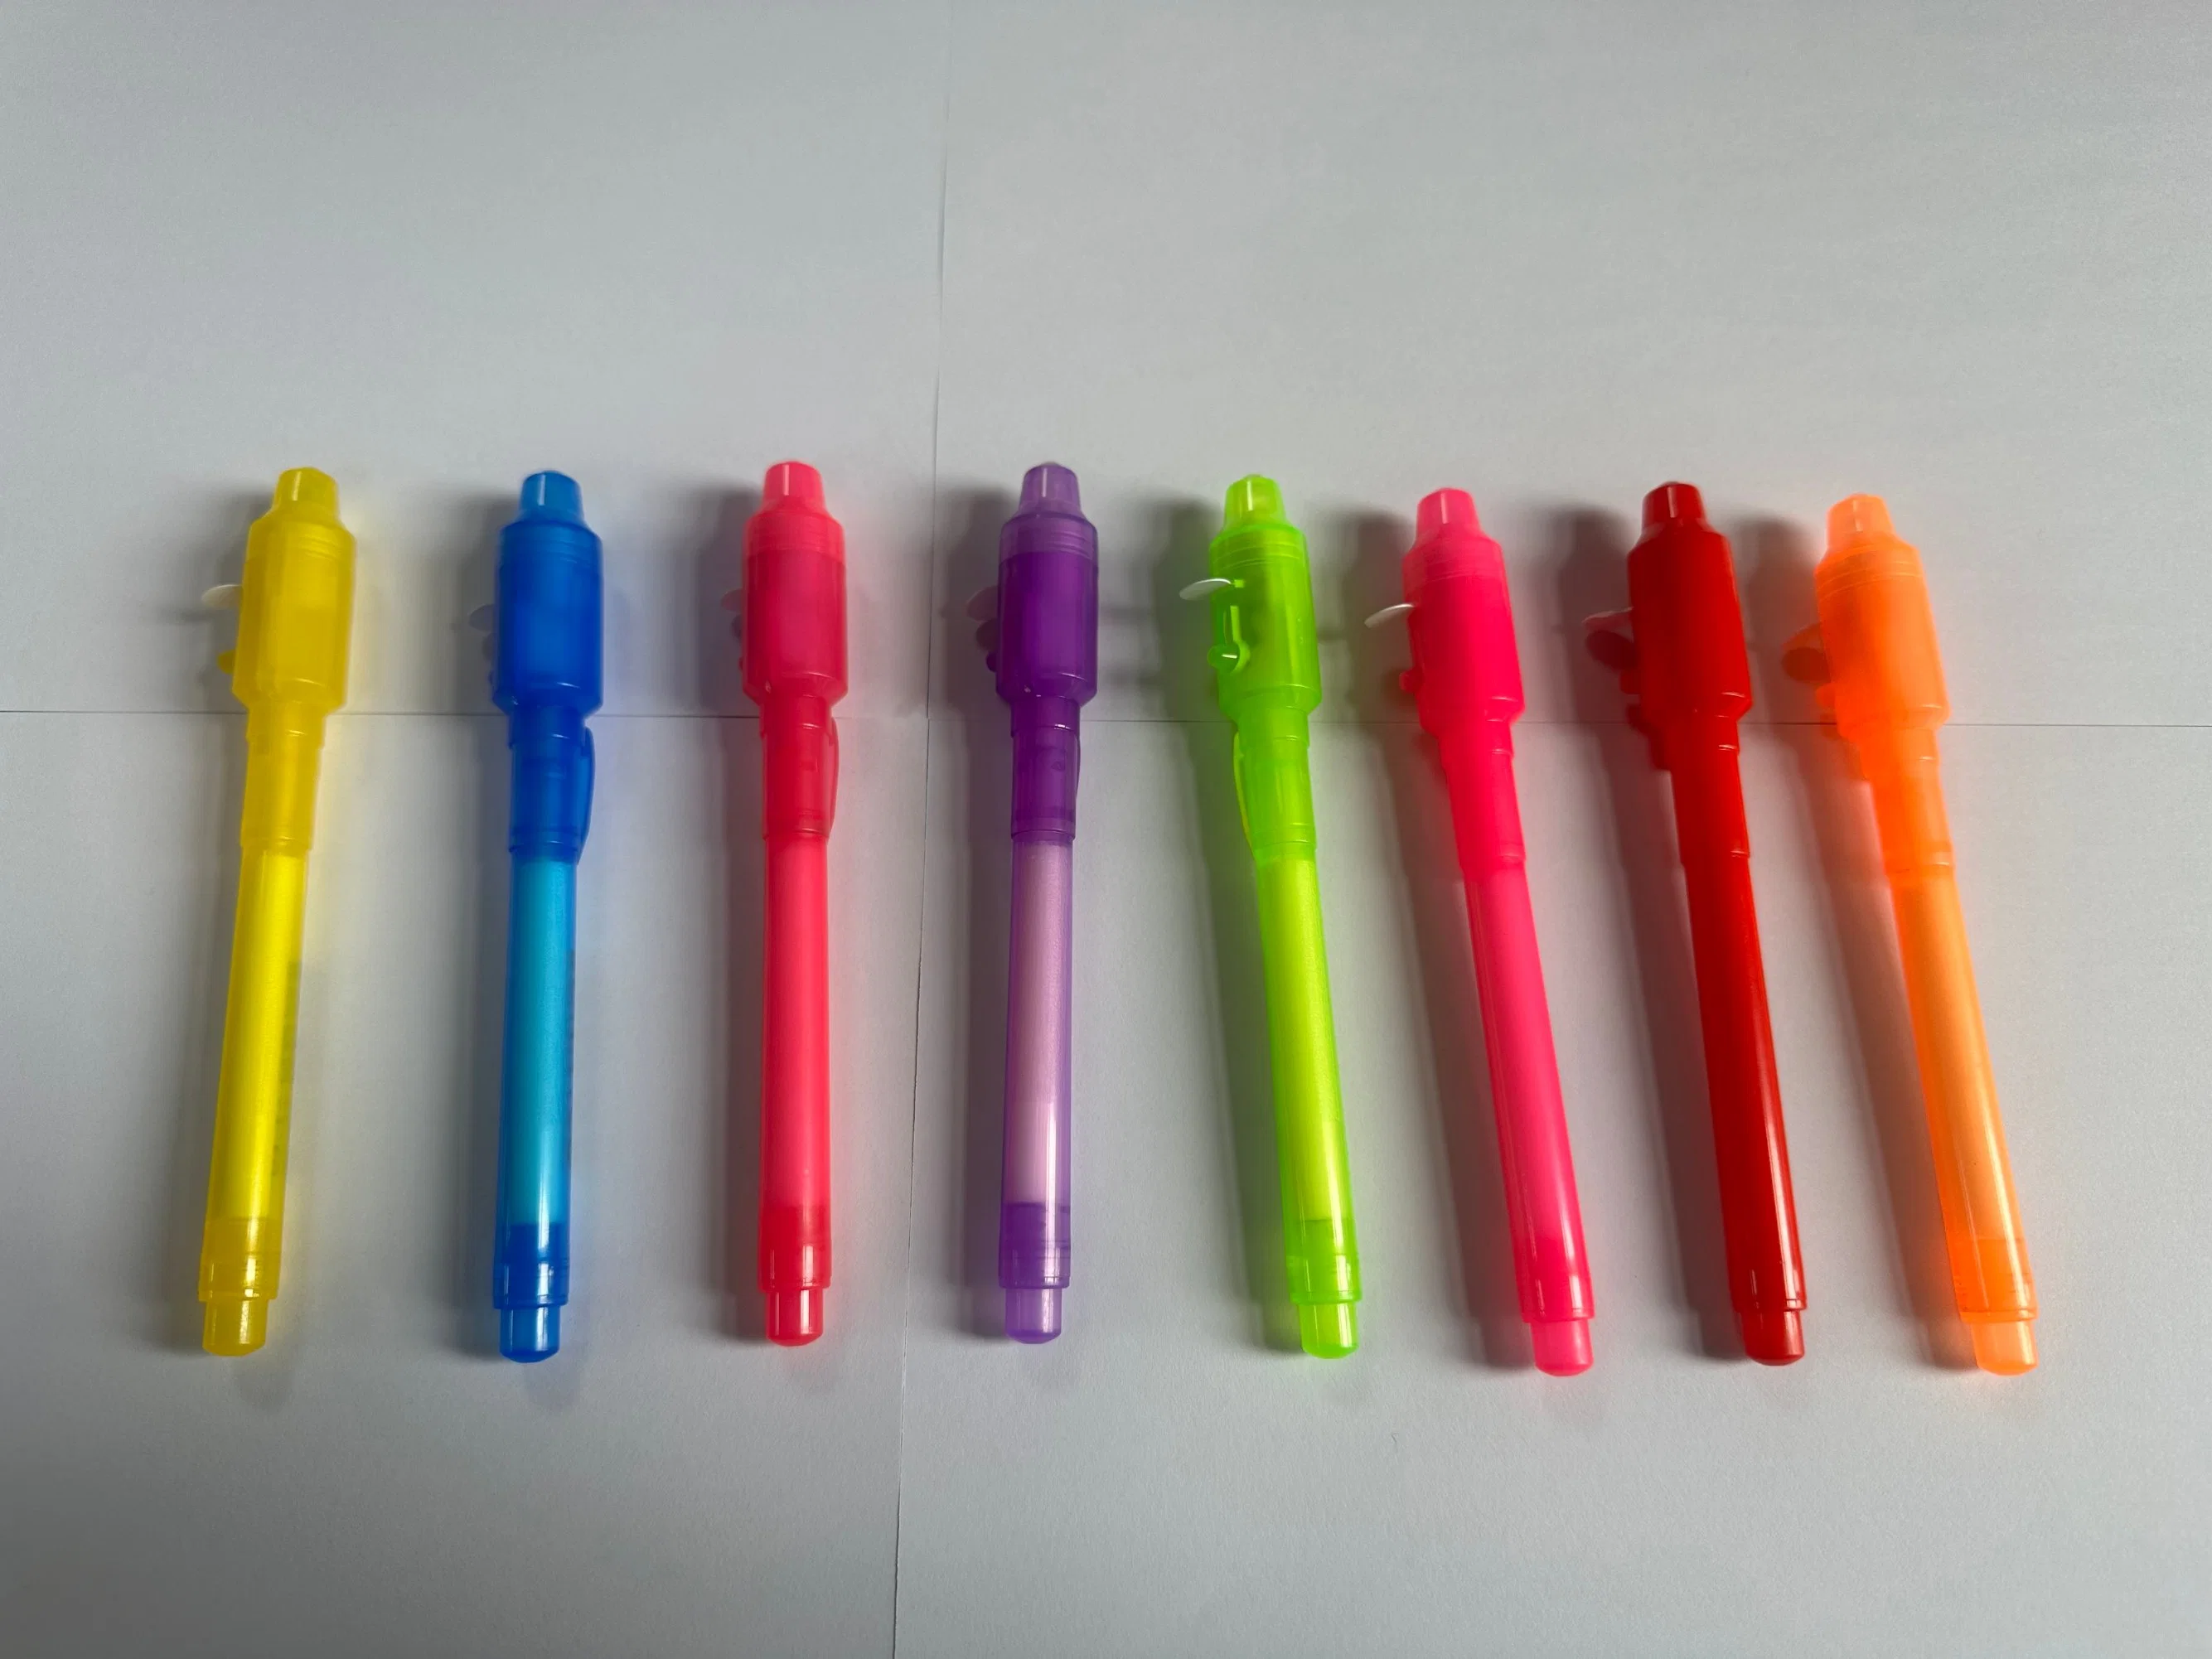 Invisible Ink Pen, Spy Pen with UV Light + Mini Top Secret Notepads -Secret Message Writer Magic Marker for Kids Gift Pack